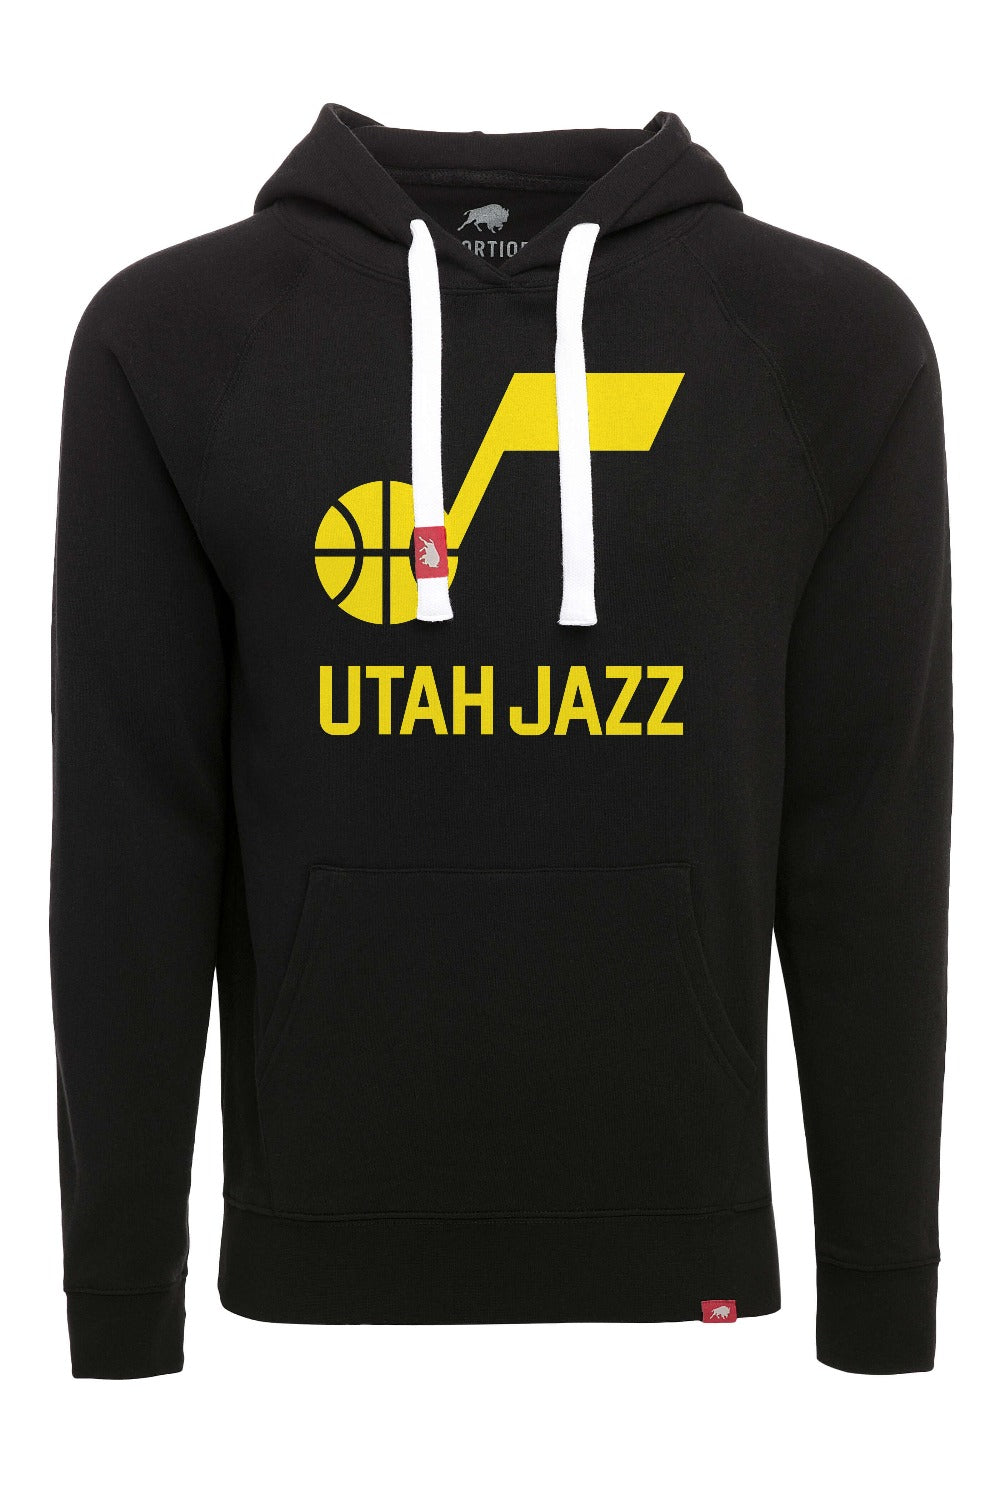 UTAH JAZZ TEAM STORE - 12 Photos - 301 W S Temple, Salt Lake City, Utah -  Sports Wear - Phone Number - Yelp